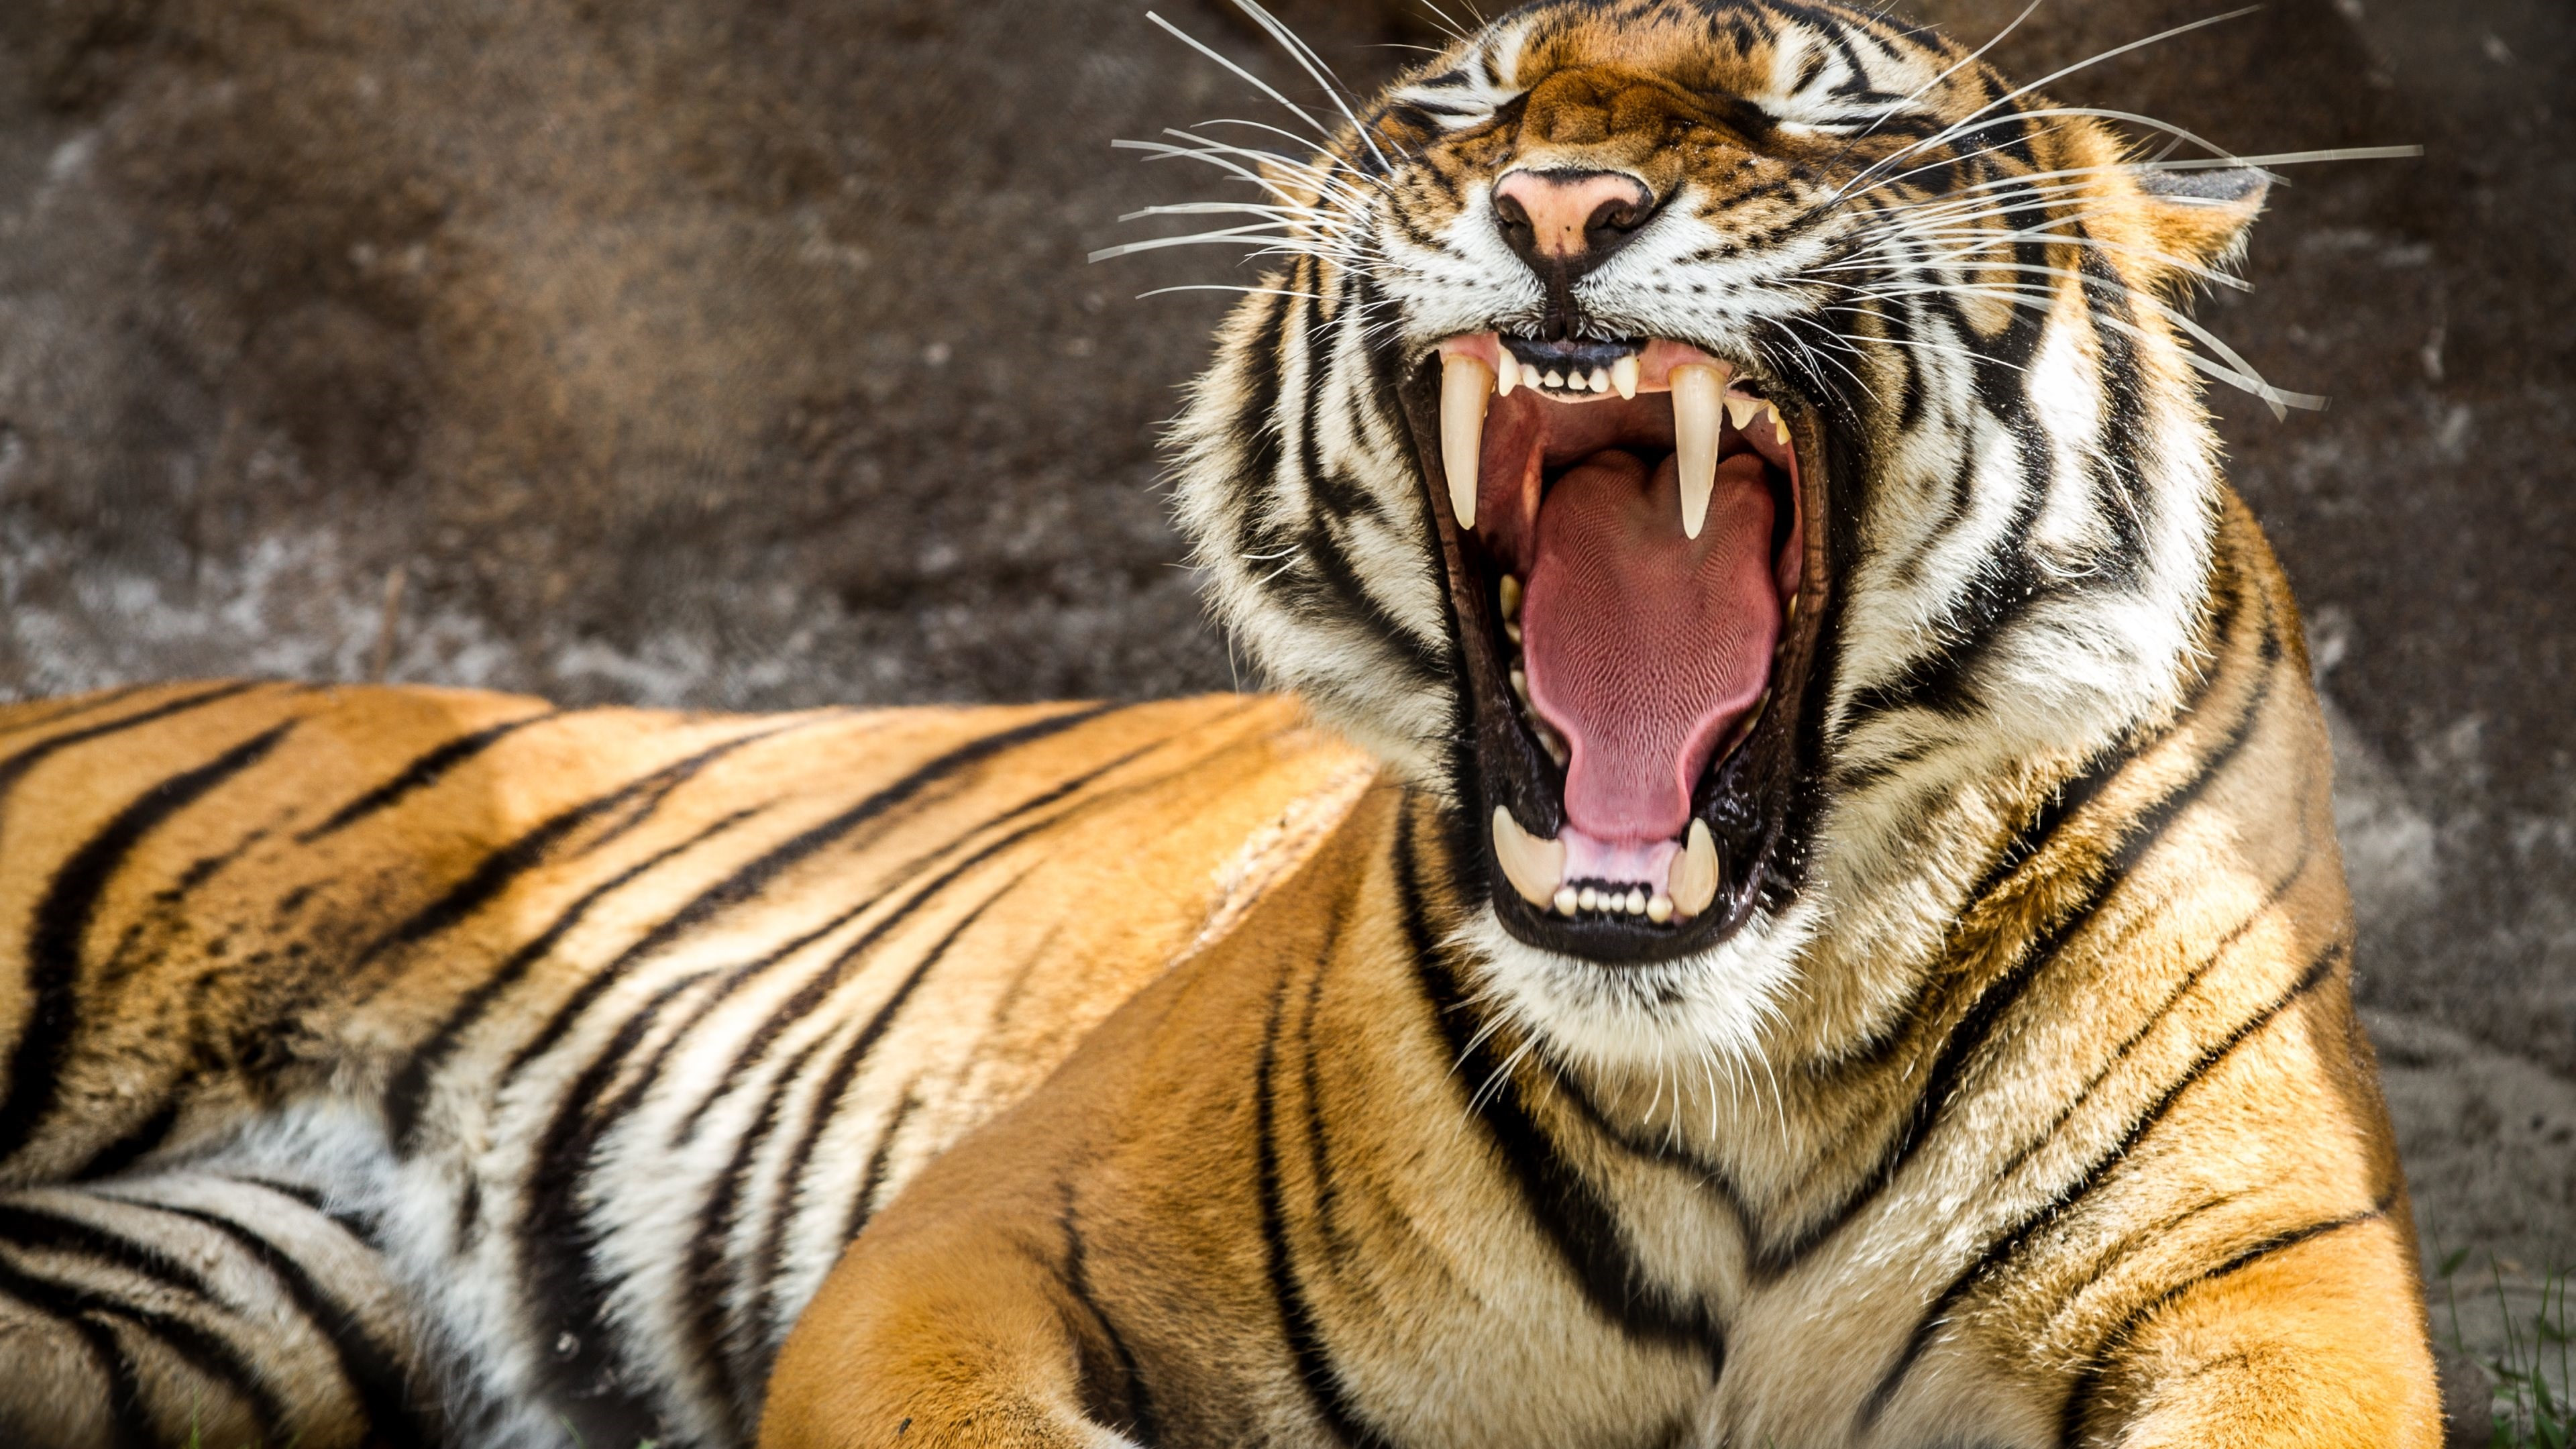 Tiger Teeth Wallpaper - High Definition Tiger Images Hd - HD Wallpaper 